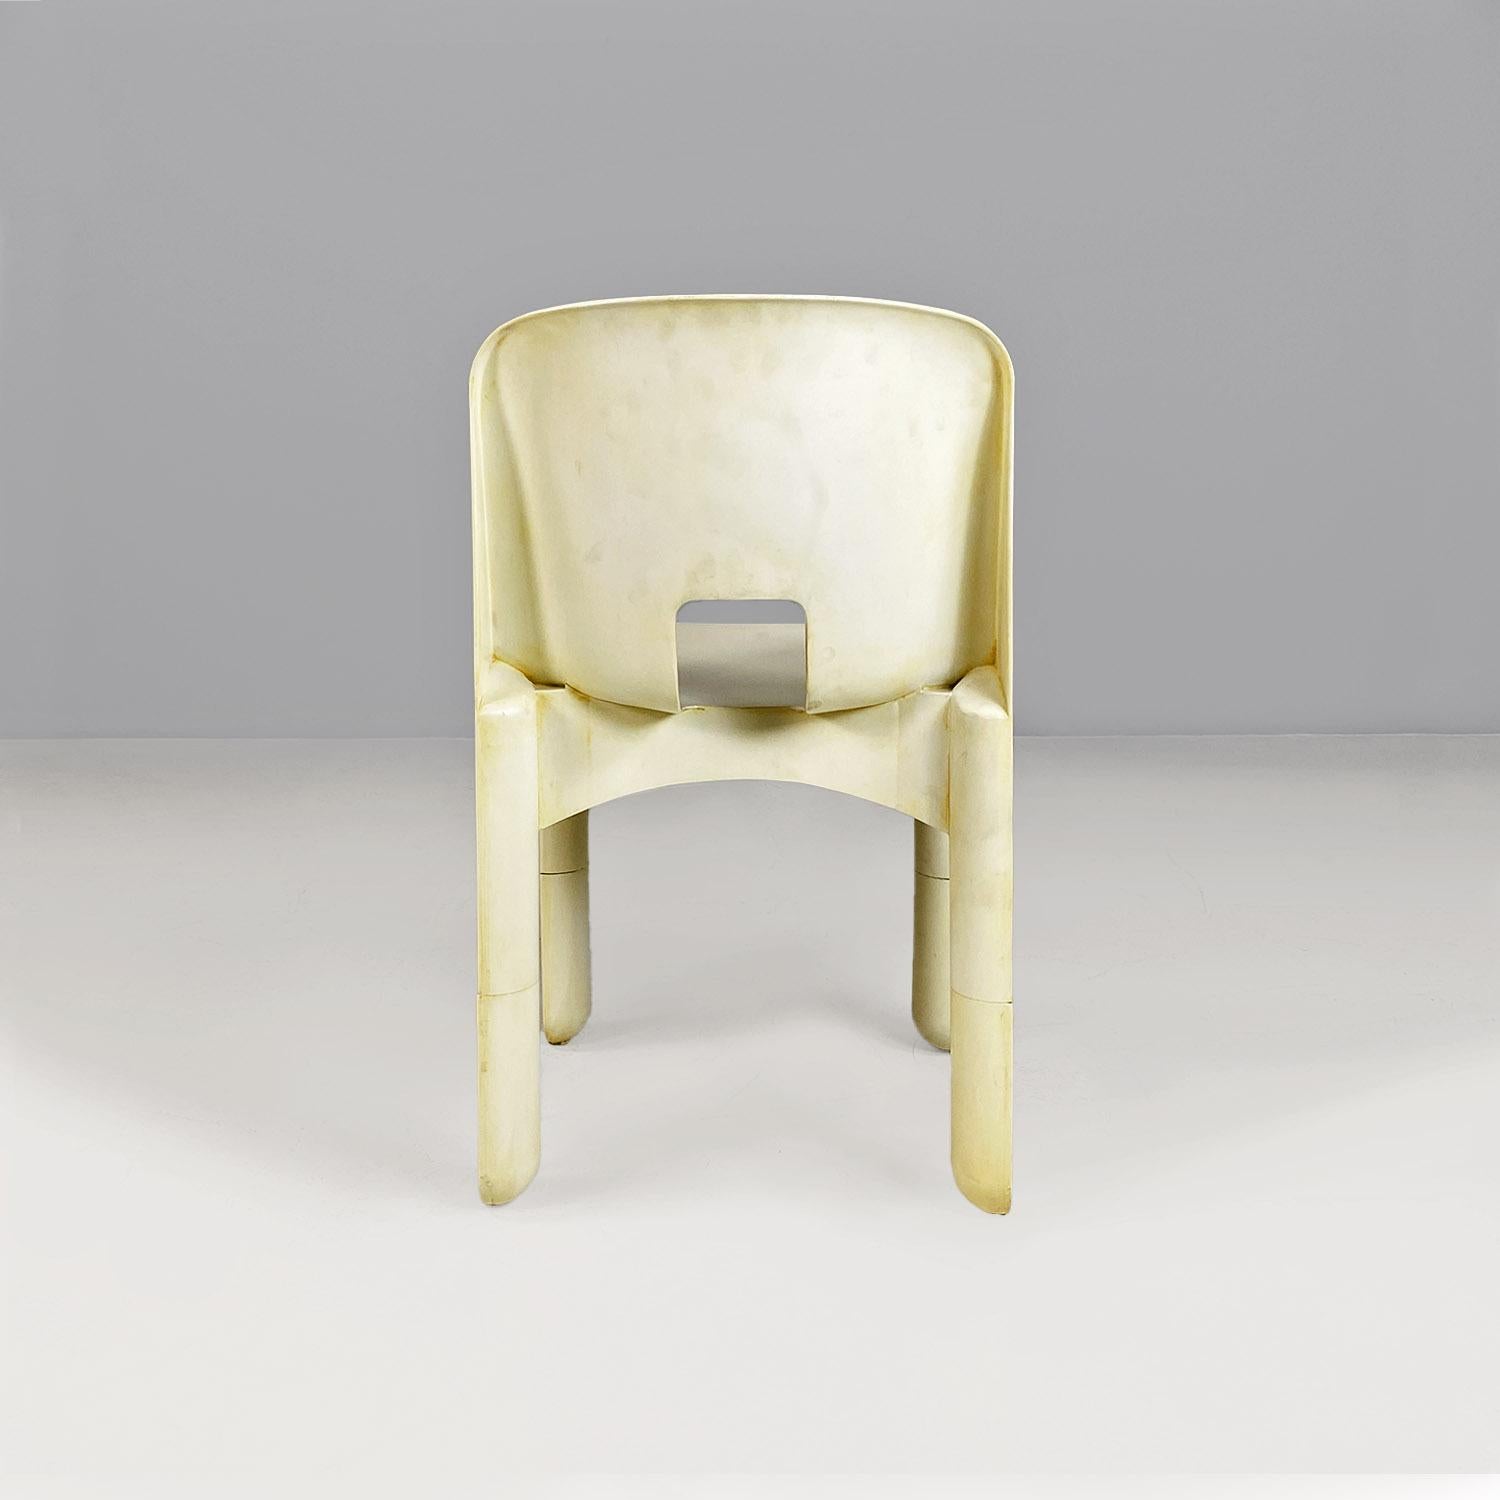 Italian modern white plastic 860 Universale Chairs, Joe Colombo, Kartell, 1970s For Sale 2